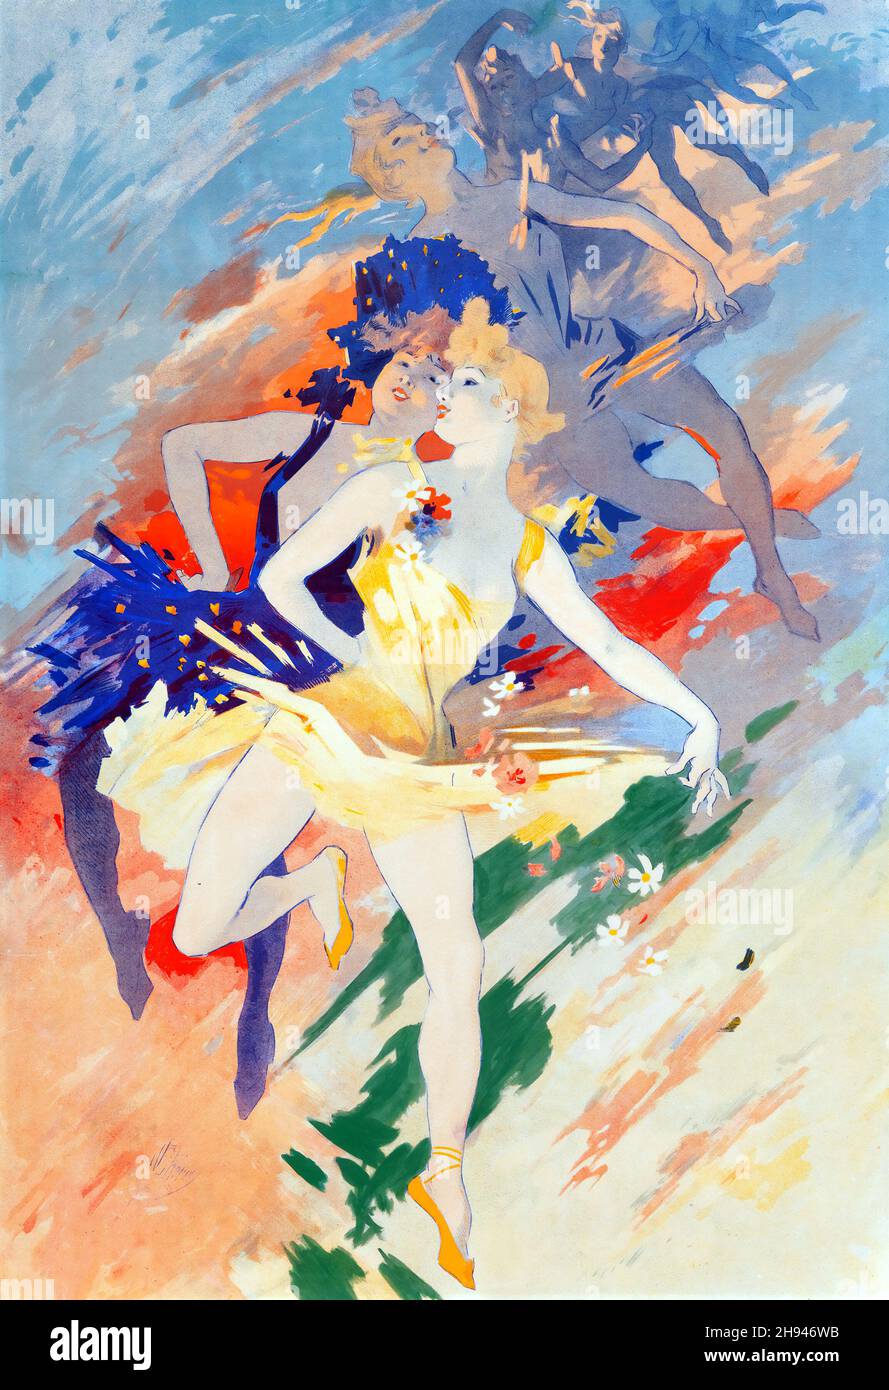 La Danse, Poster art by Jules Chéret (1836-1932). French. 1900. Stock Photo